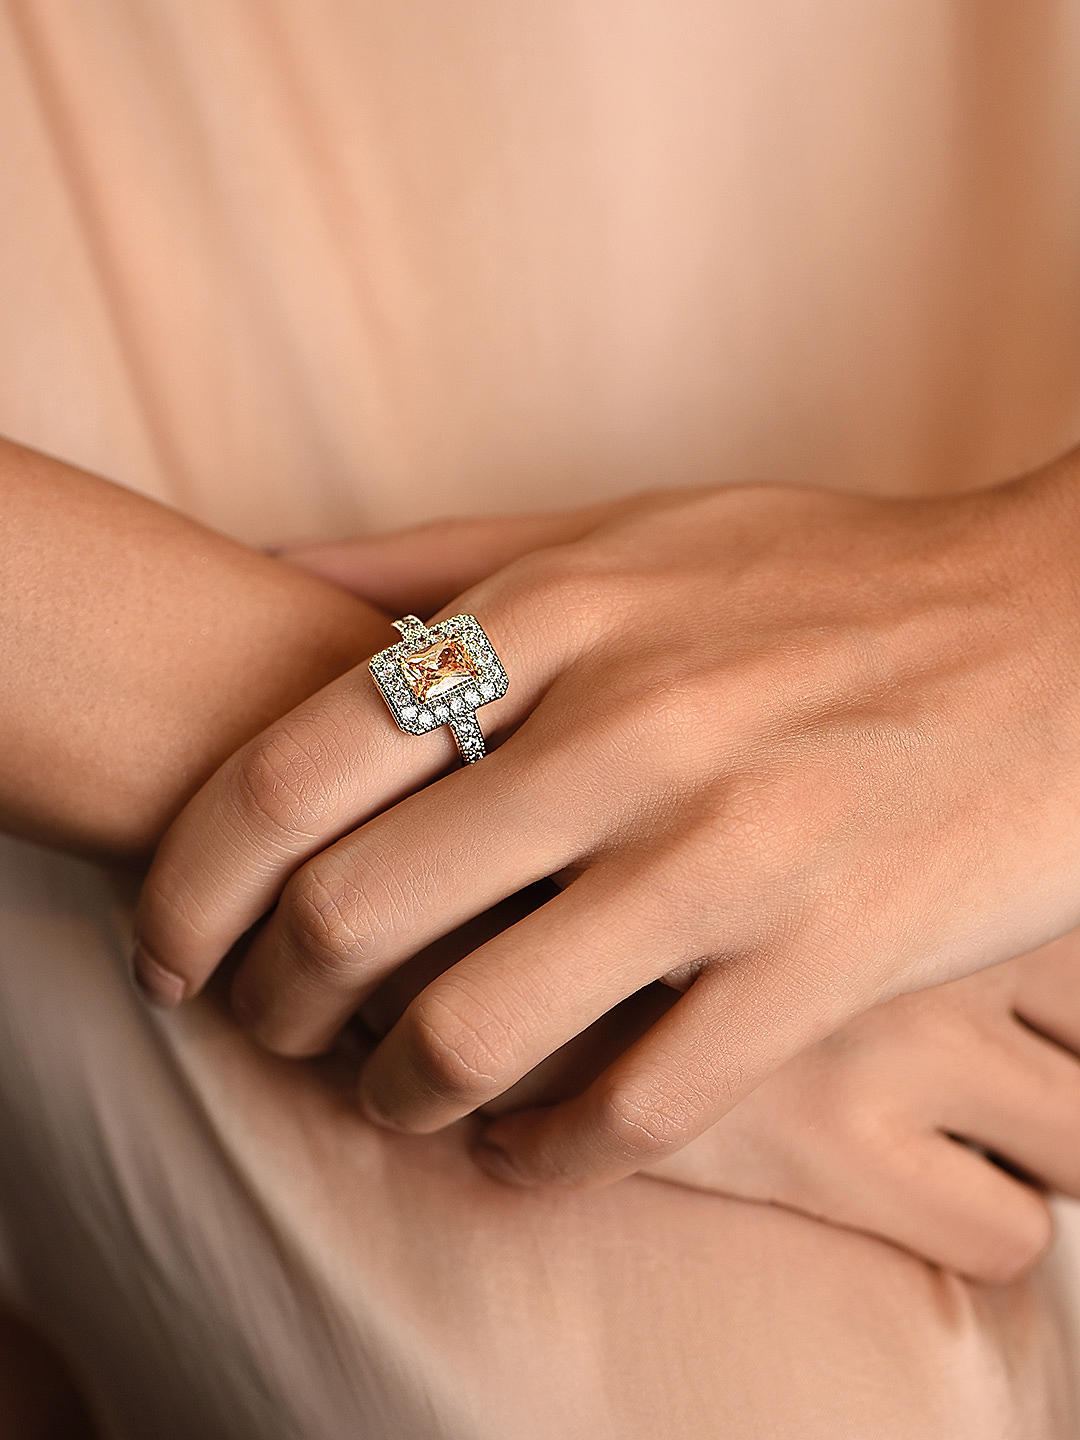 Buy Engagement Rings Online, Buy Wedding Rings Online for Women in India